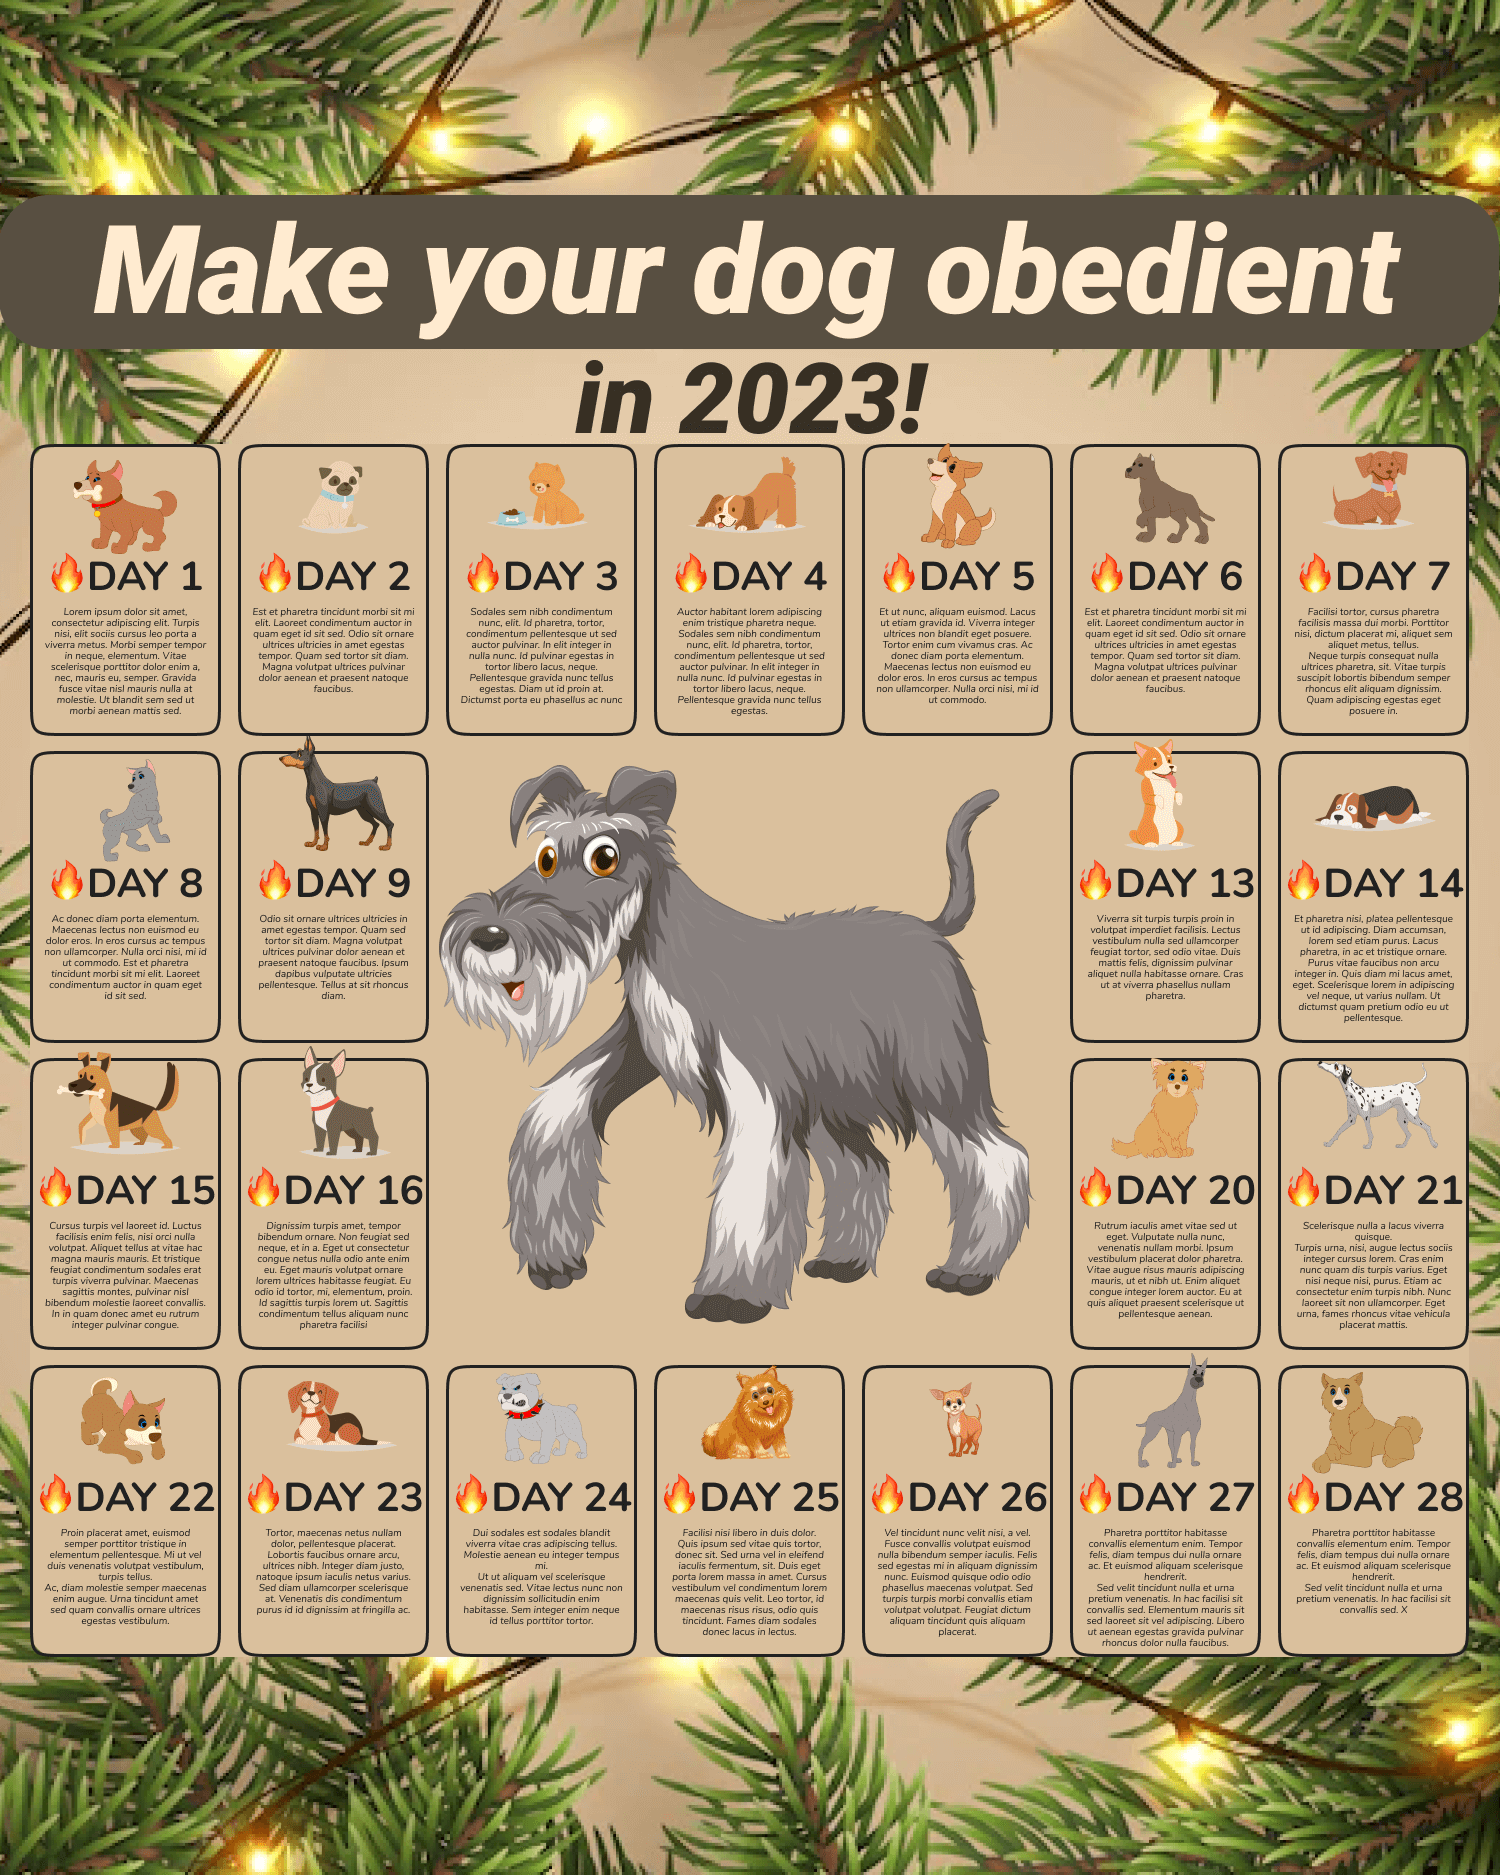 make your dog obidient